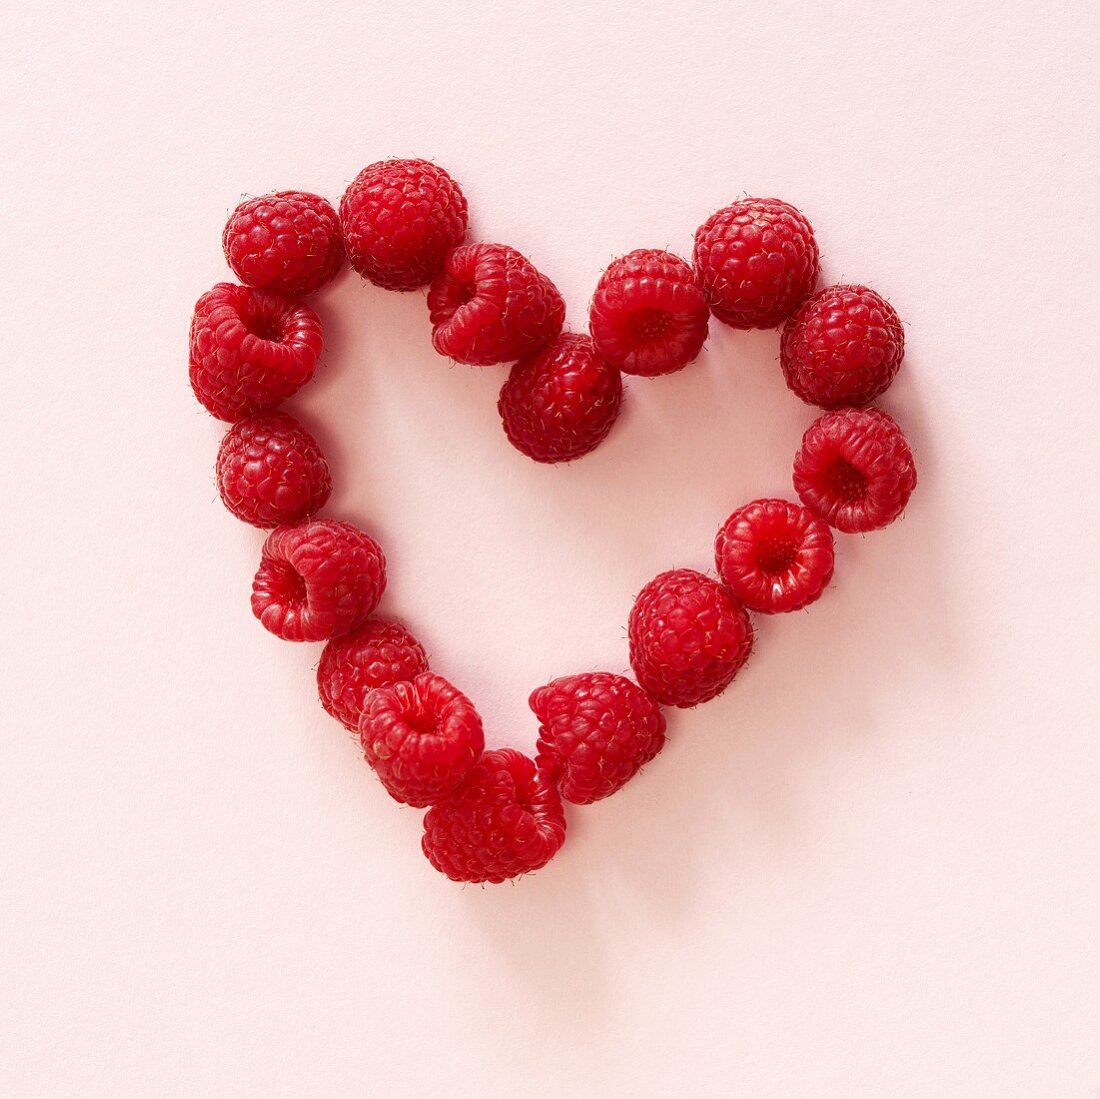 Fresh raspberries forming a heart